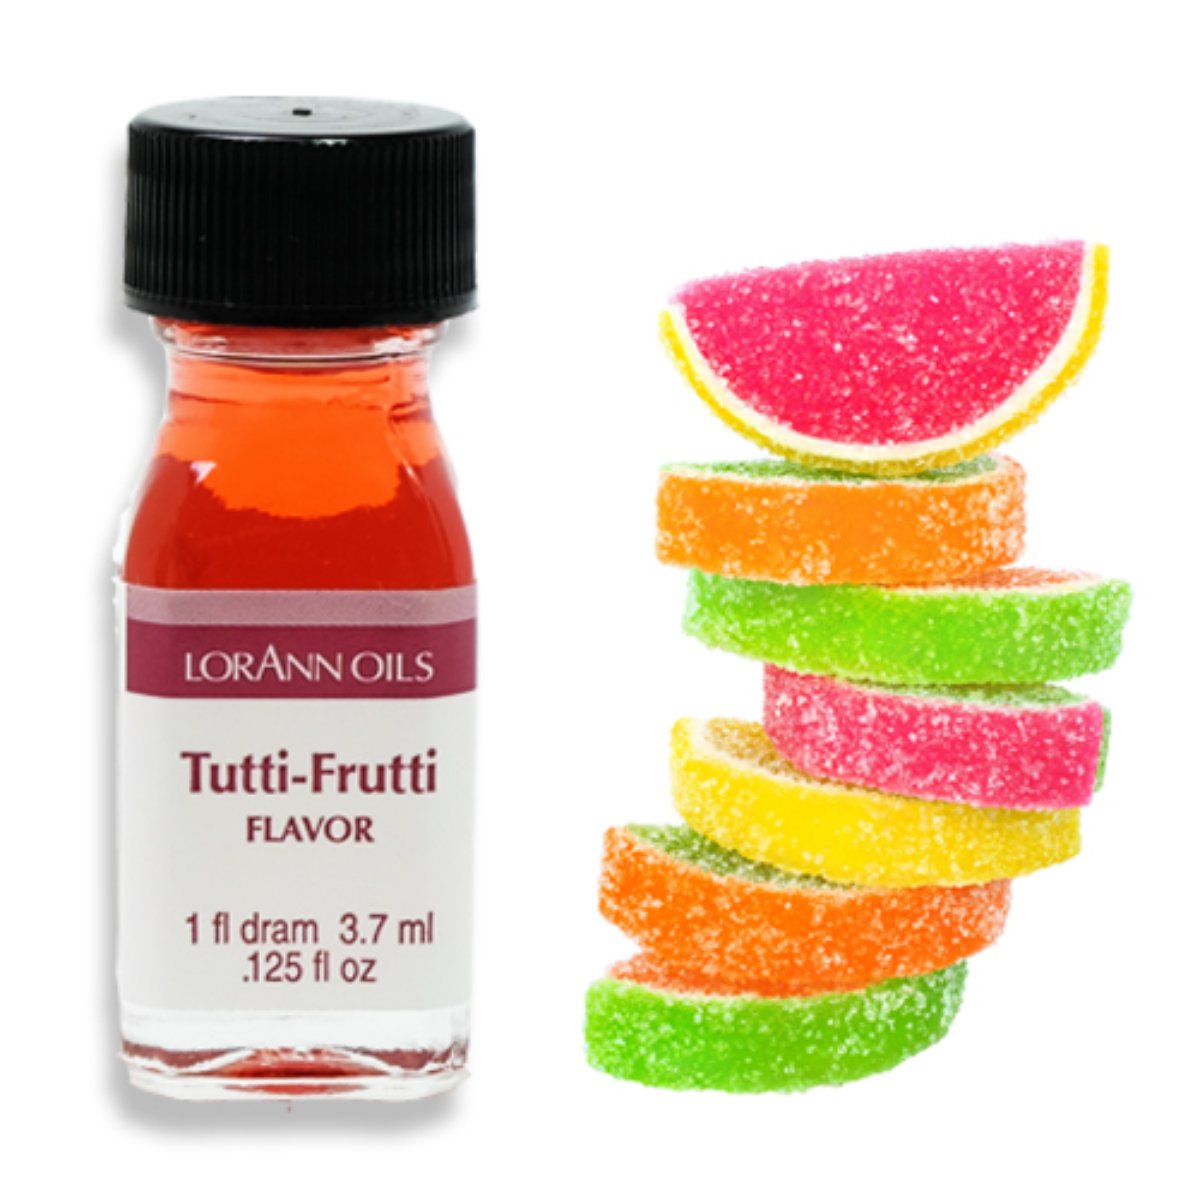 Tutti-Frutti Flavor 1 Dram - Bake Supply Plus